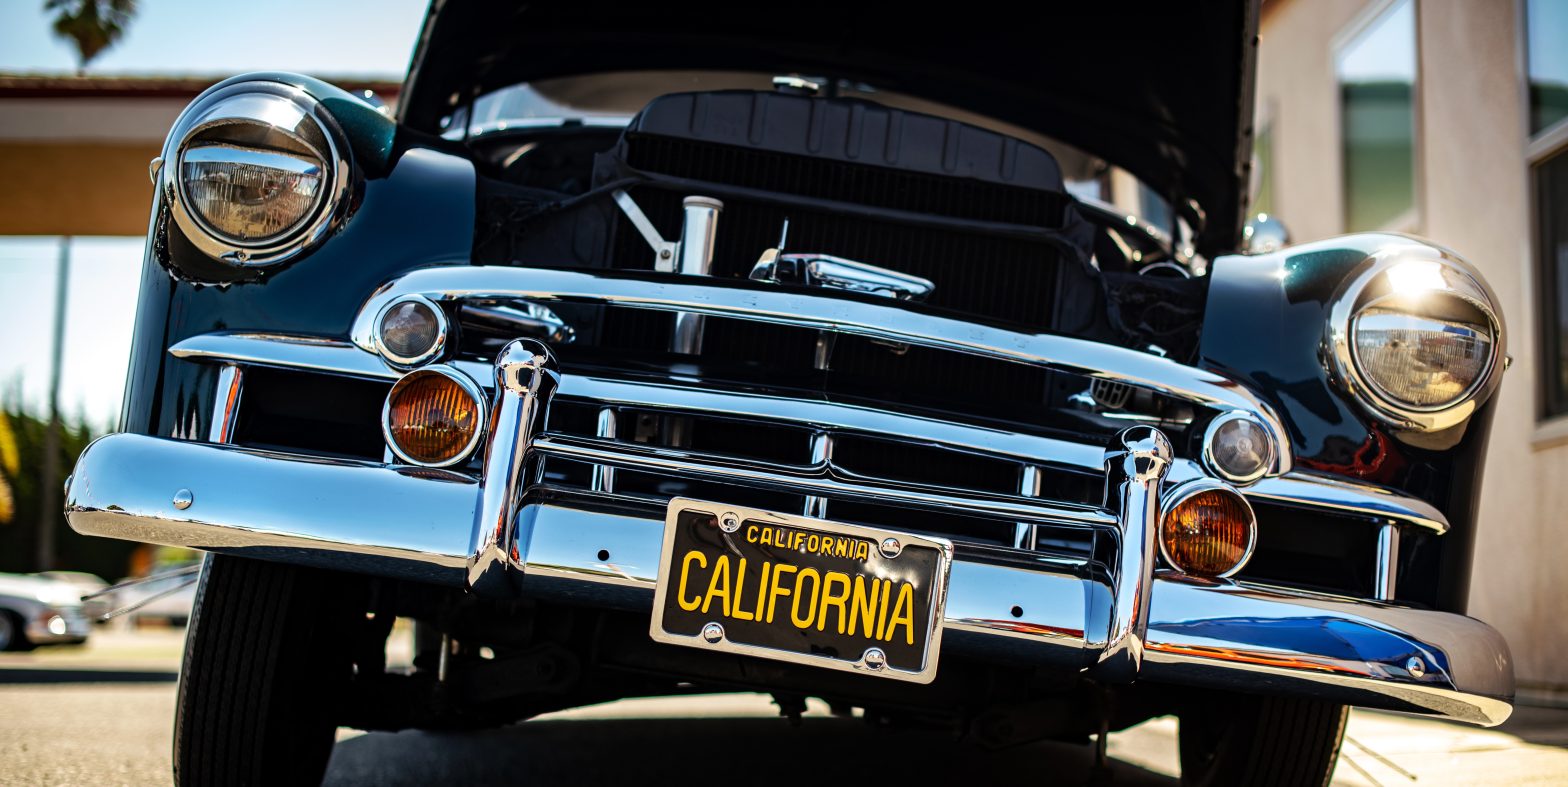 Los Angeles License Plate Lookup | Check a LA Car's History